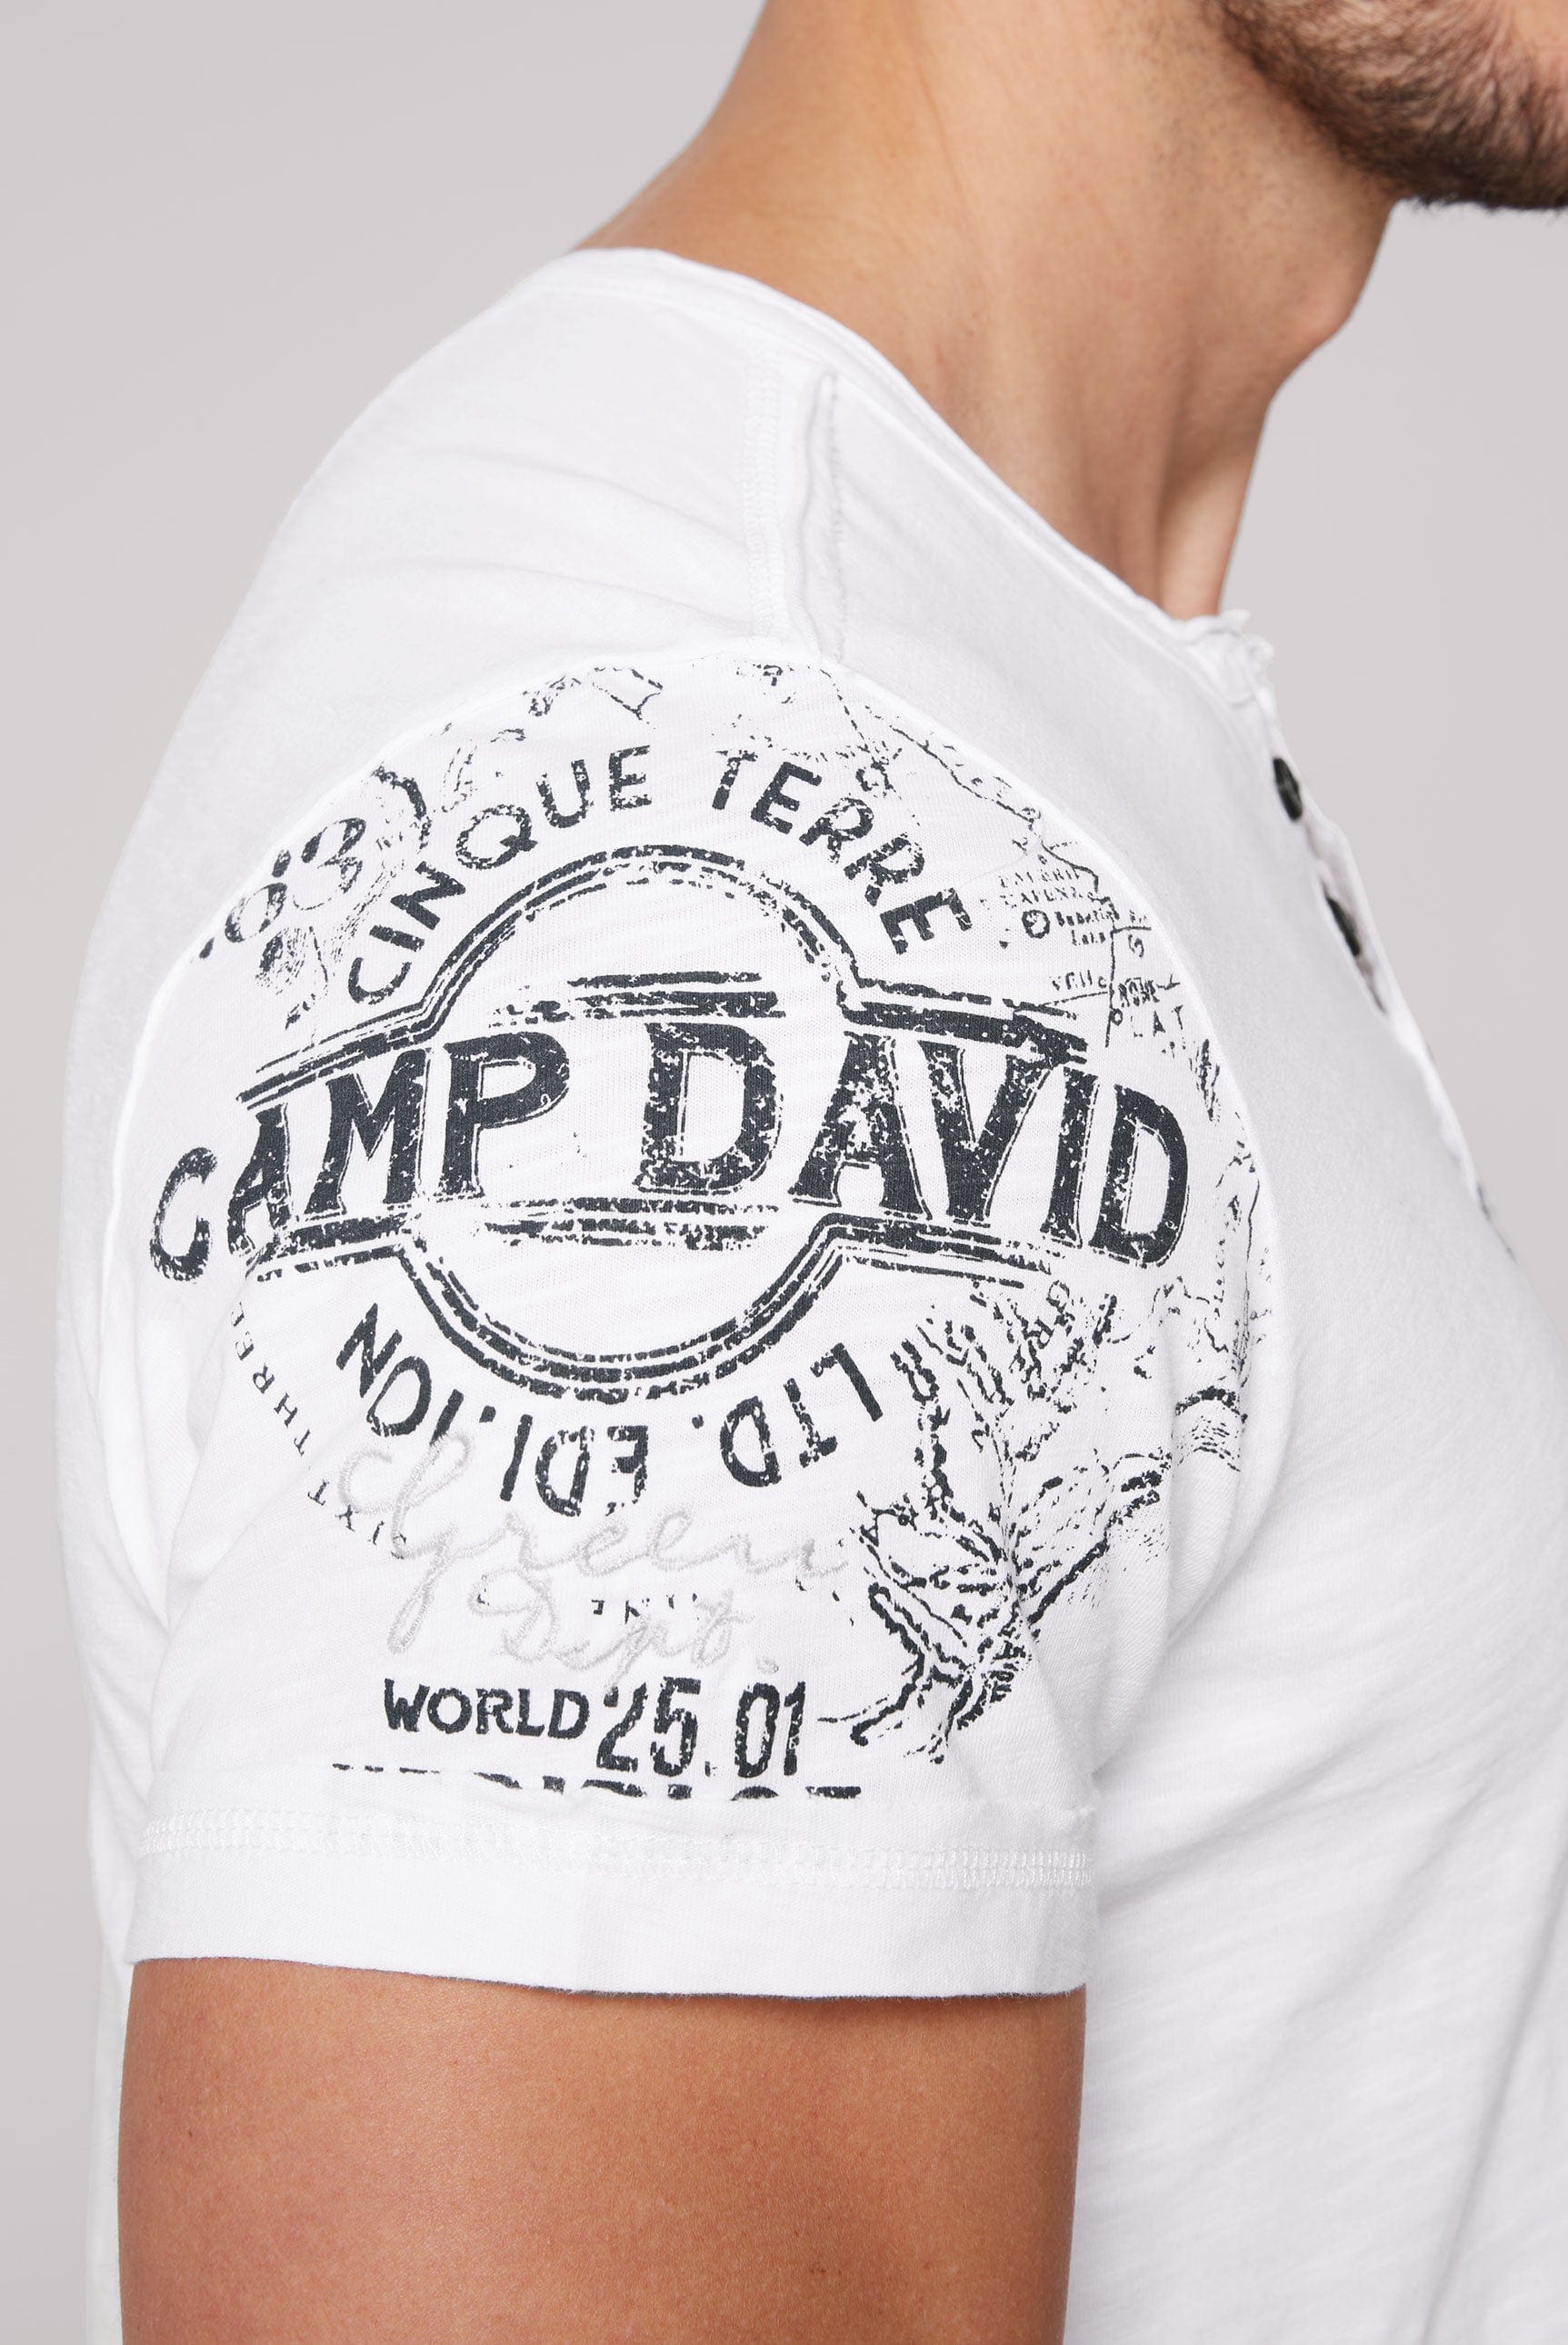 Camp David T-Shirt, white - Fashion optic button Chique Terre, Stateshop v-neck